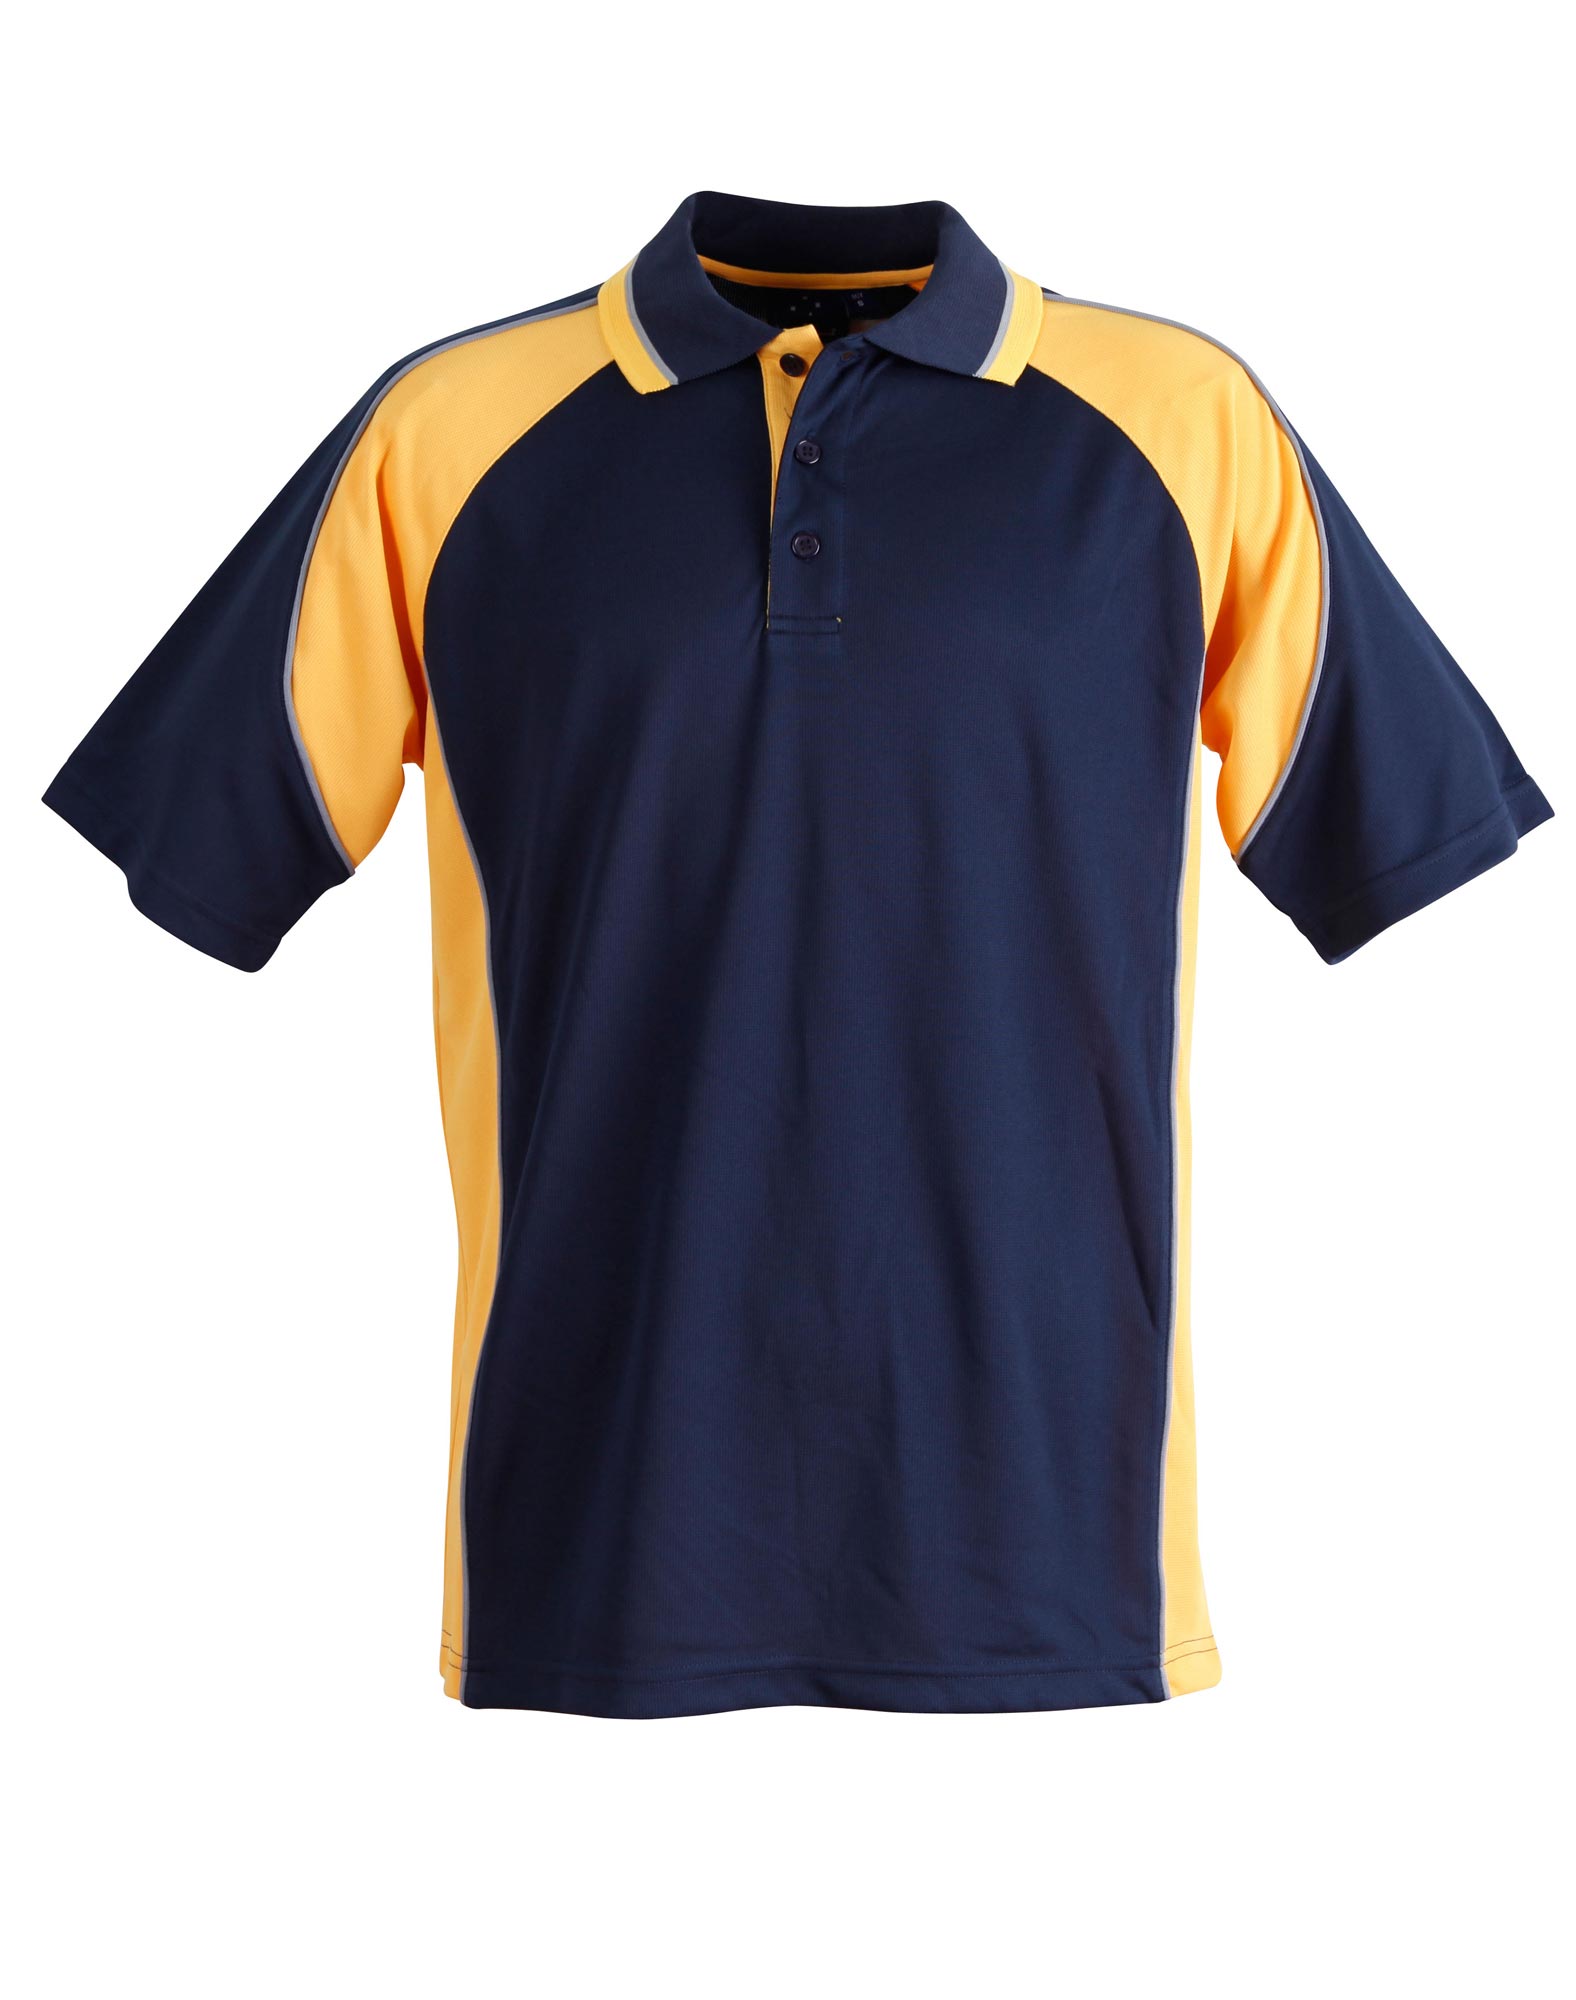 Custom (Navy Gold) Mascot Sublimated Polo Shirts Online Perth Australia